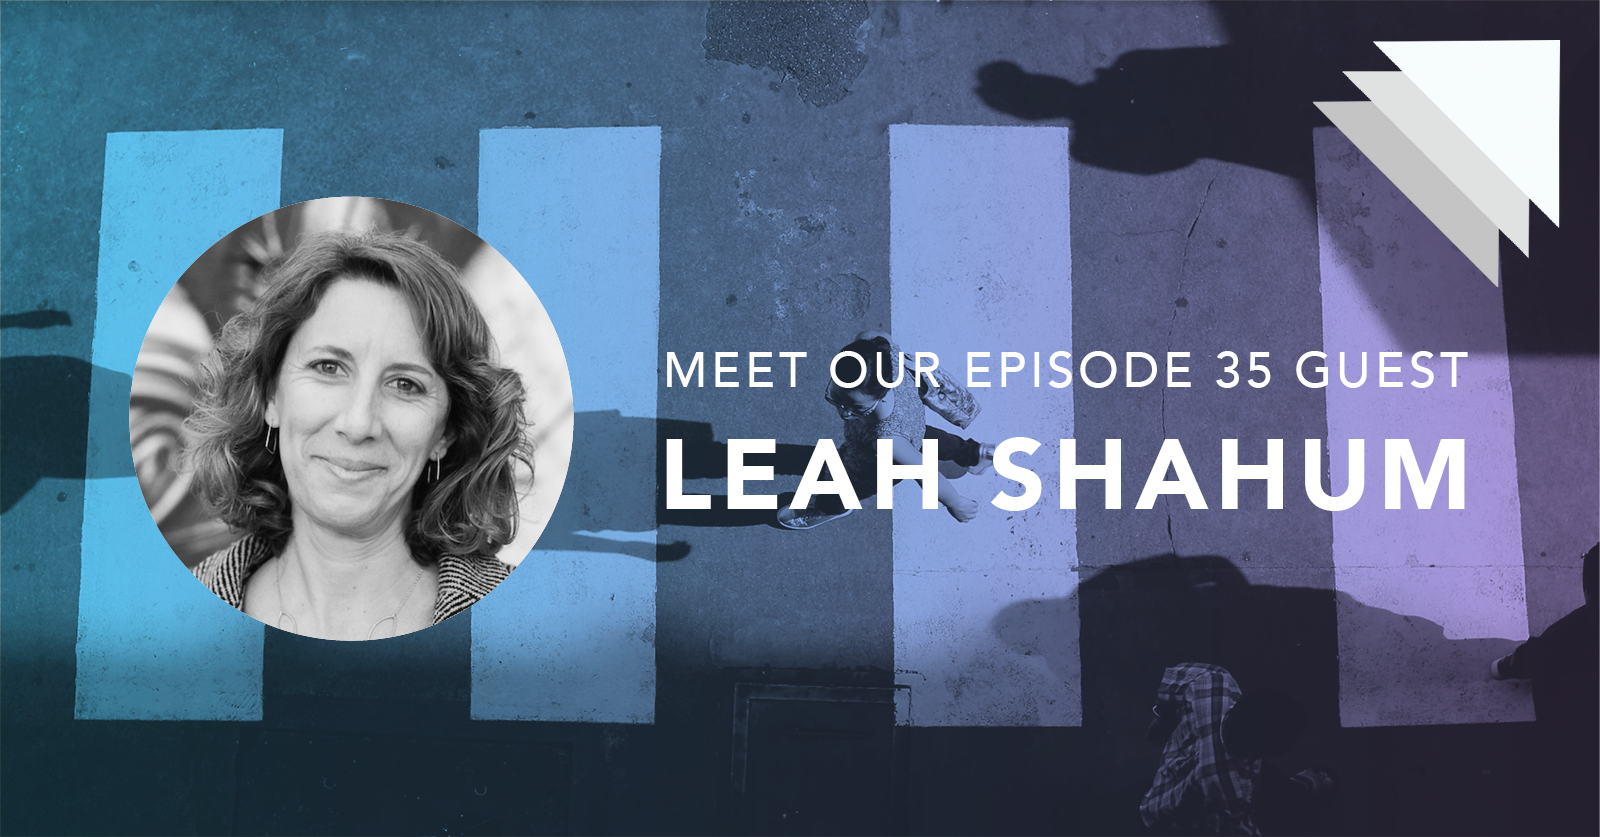 Meet our episode 35 guest Leah Shahum